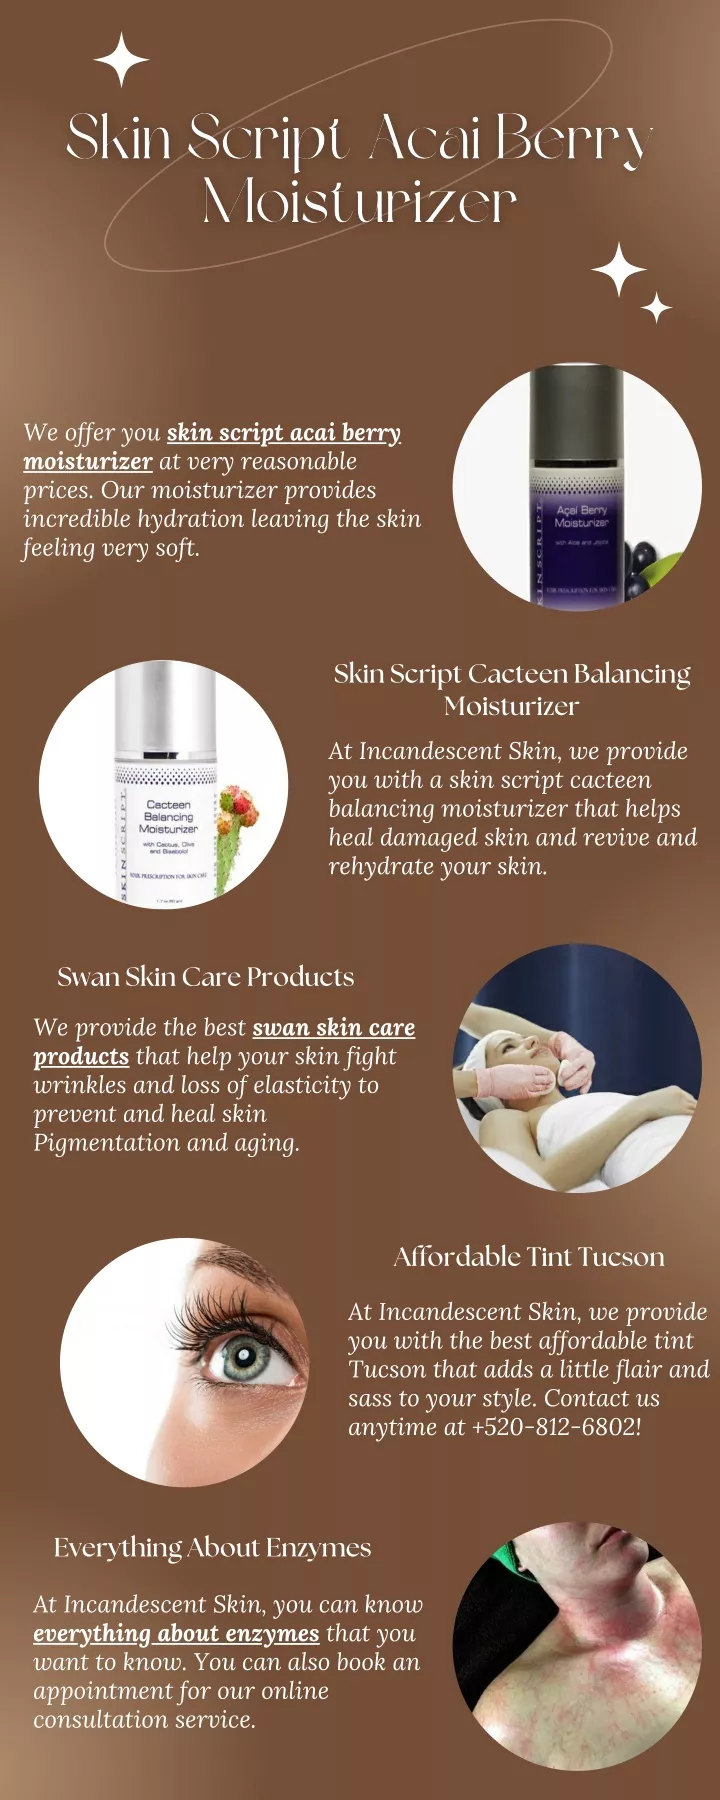 we offer you skin script acai berry moisturizer